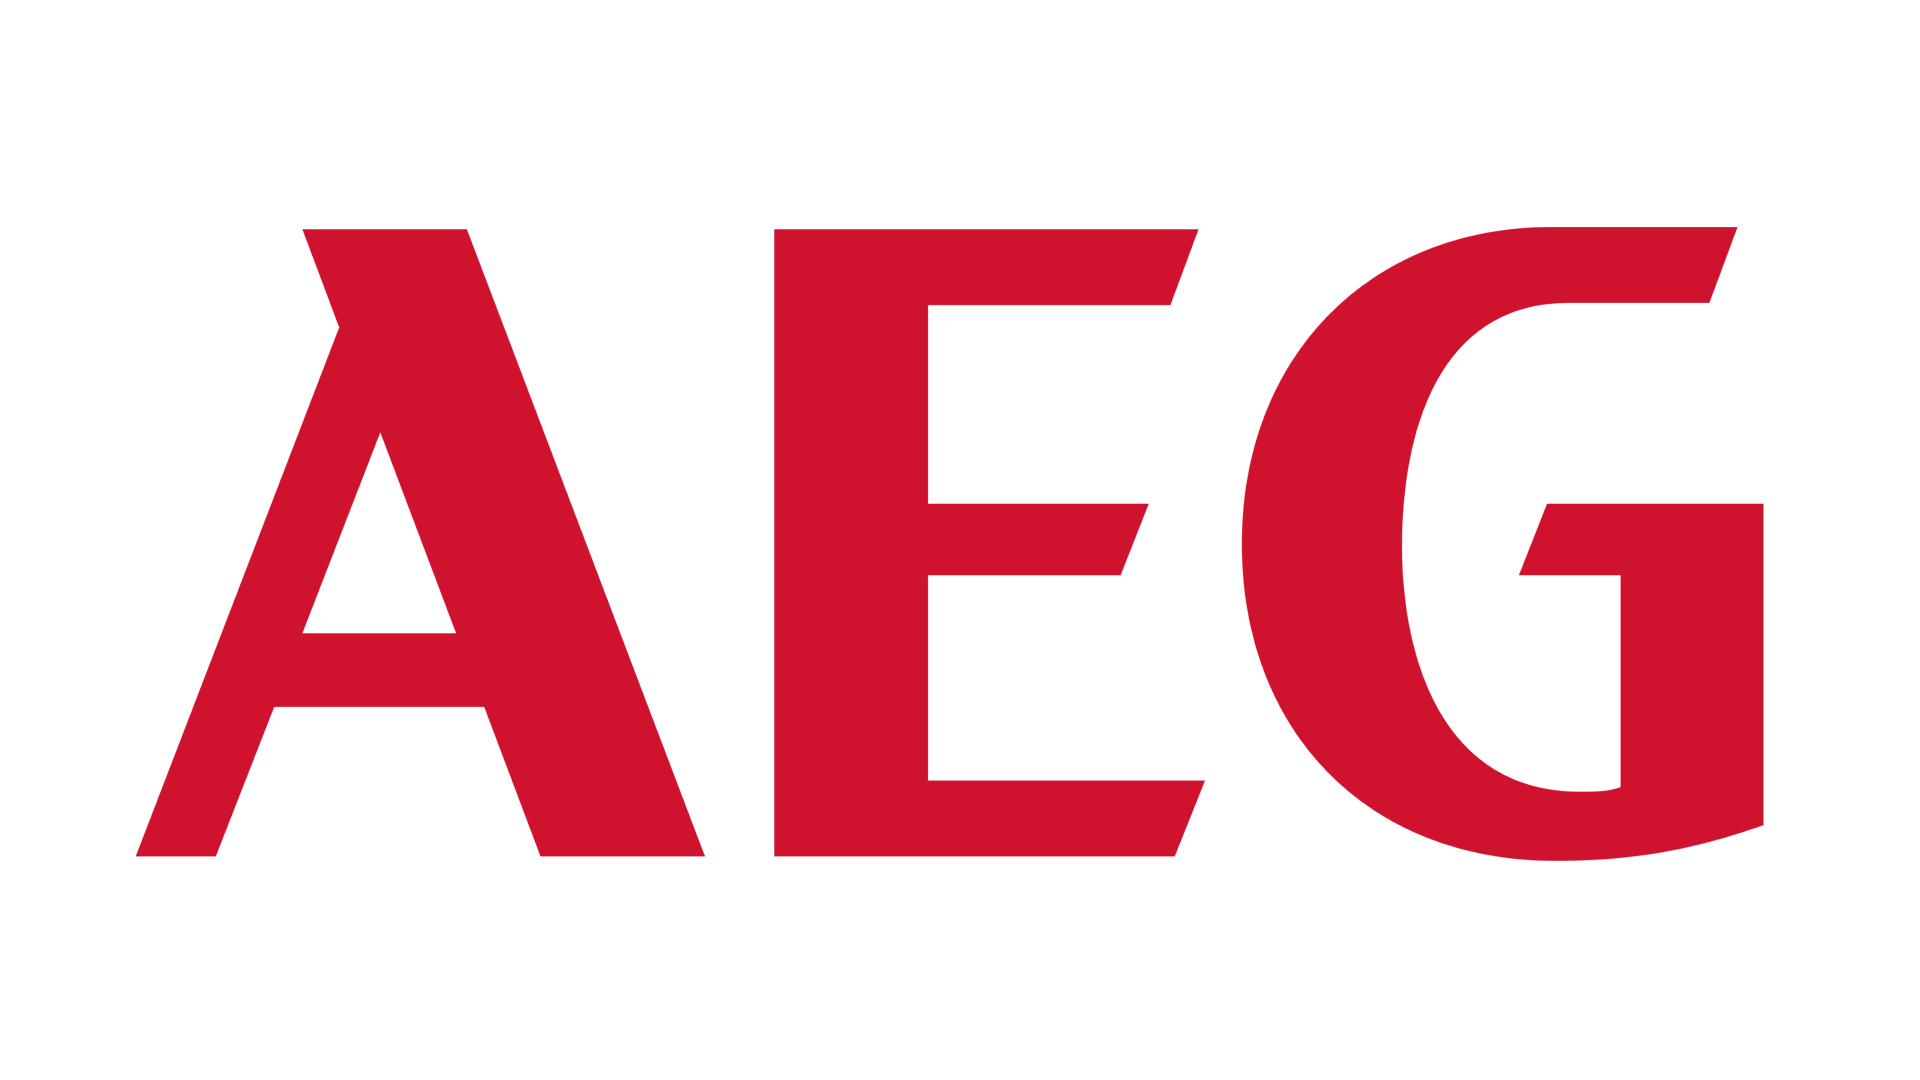 AEG Logo - AEG Logo, AEG Symbol, Meaning, History and Evolution